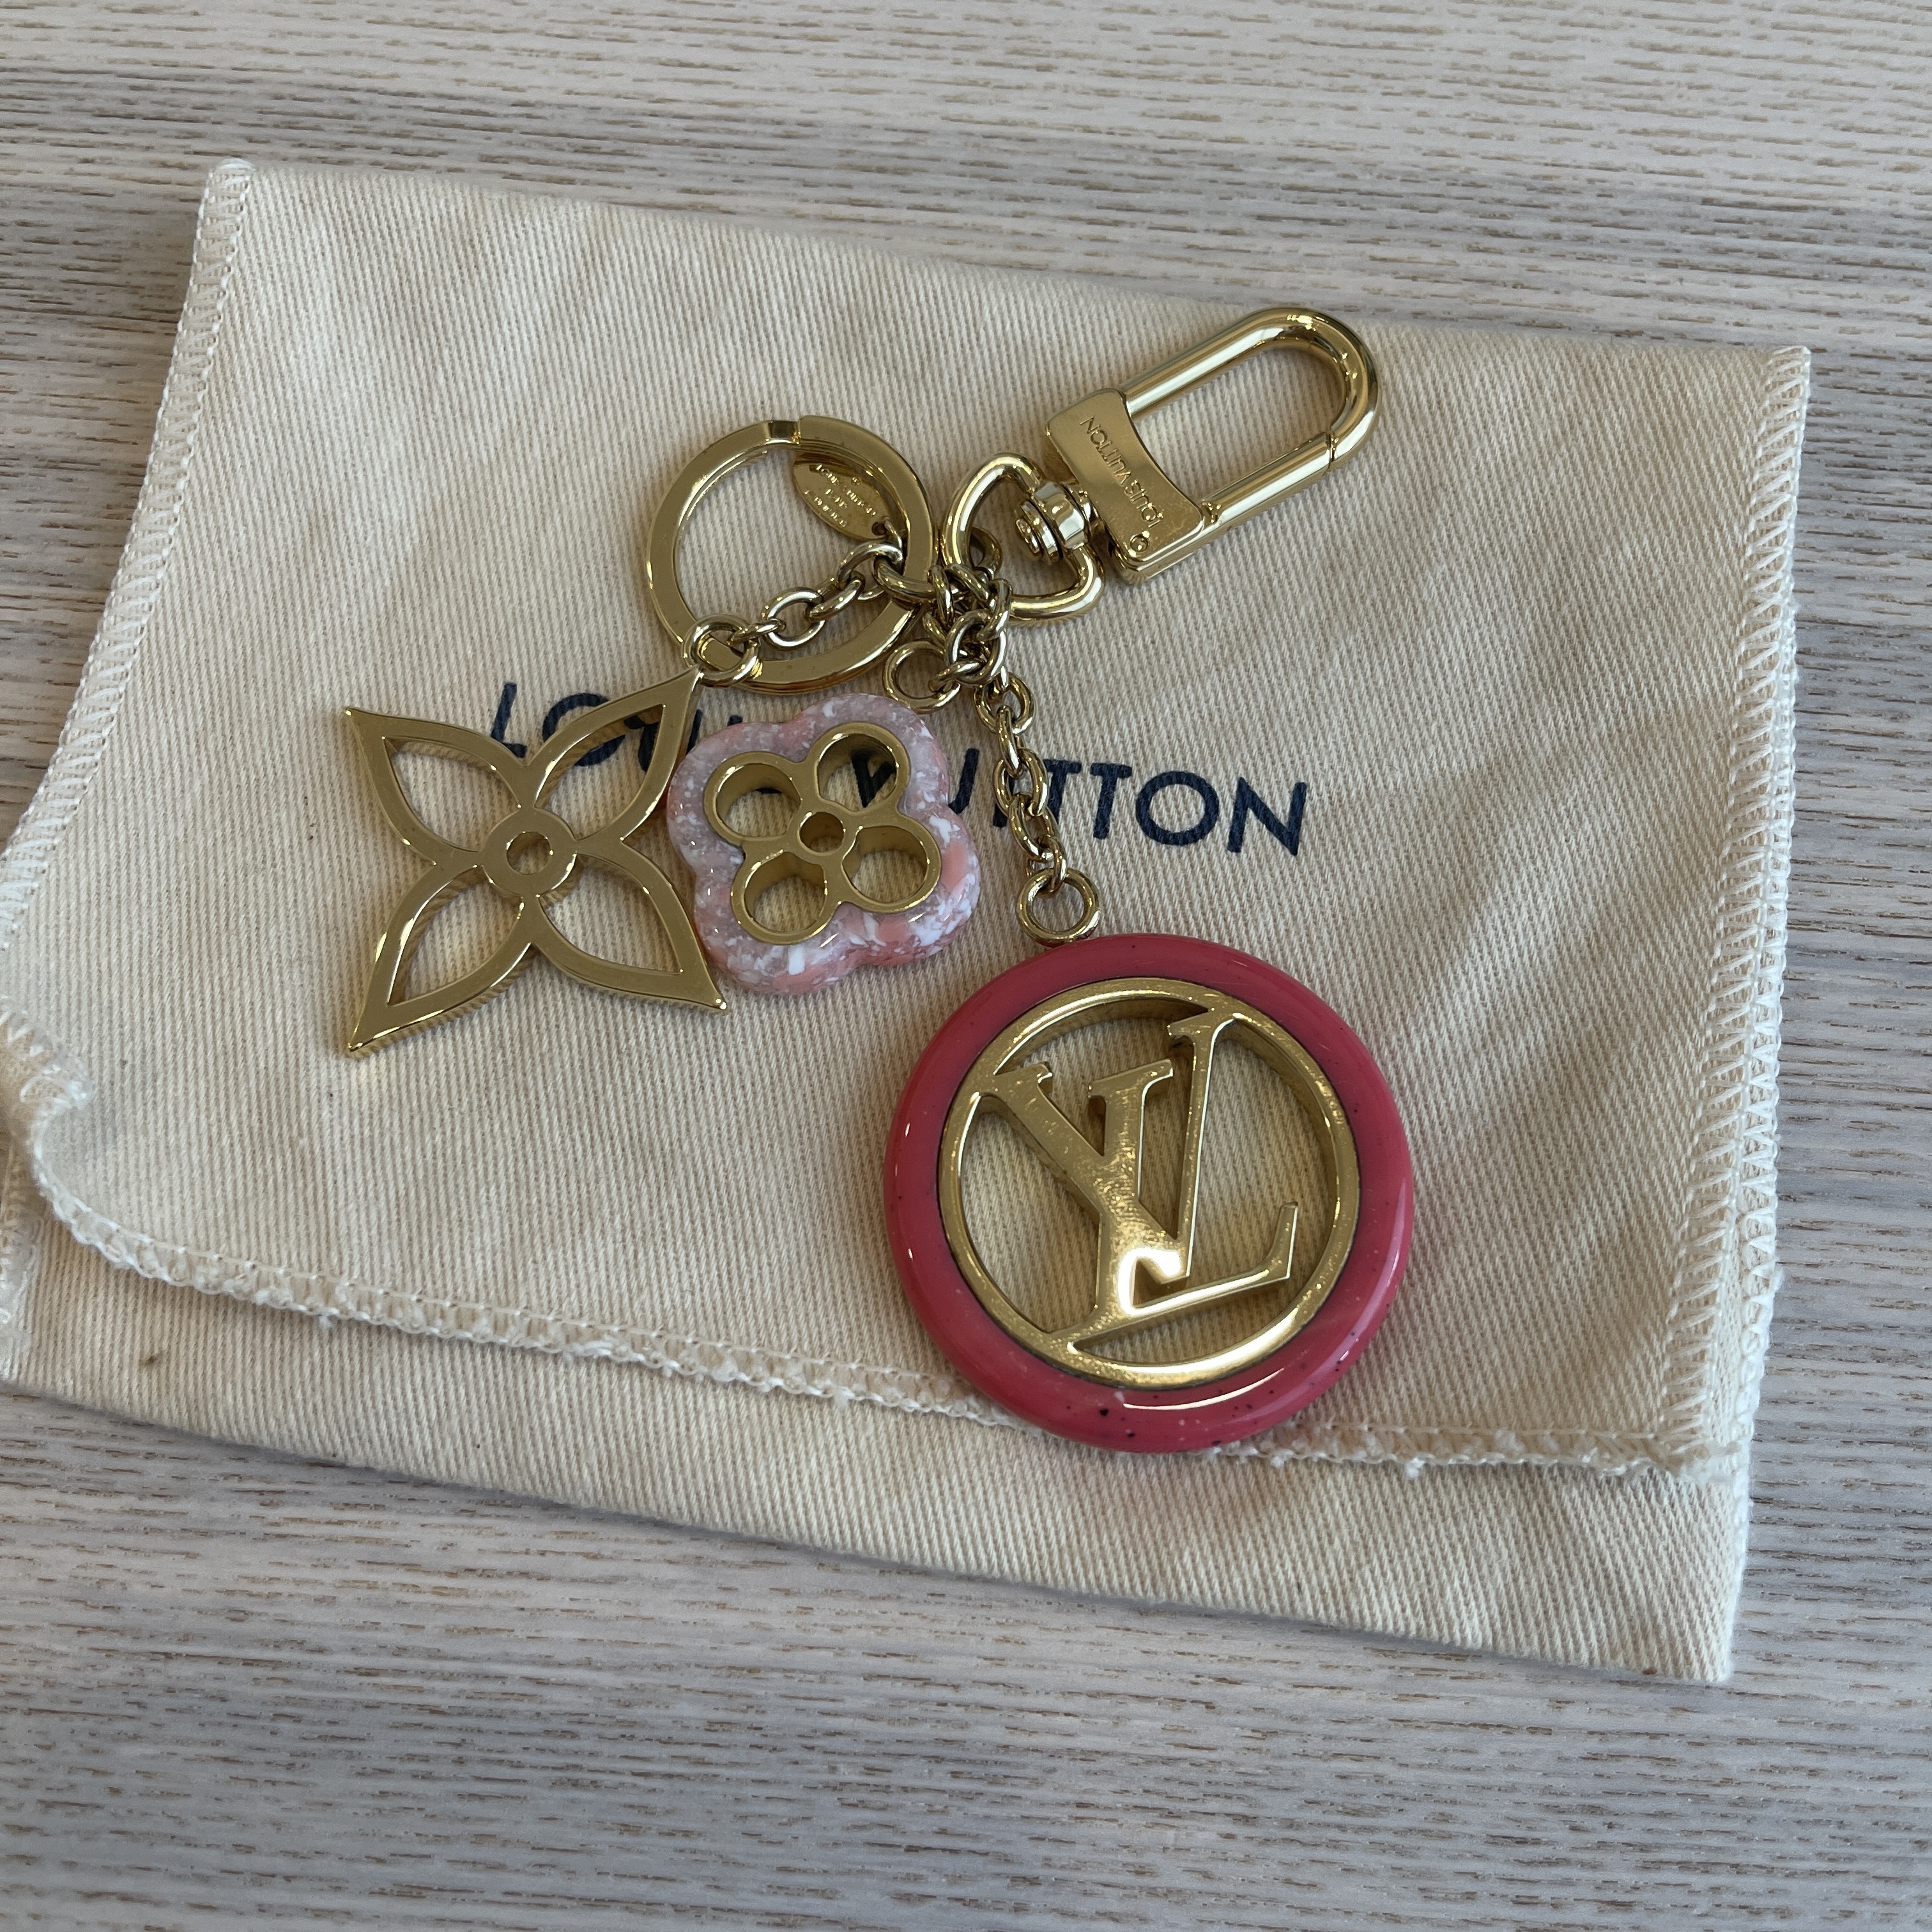 Shop Louis Vuitton Colorline bag charm and key holder by felie